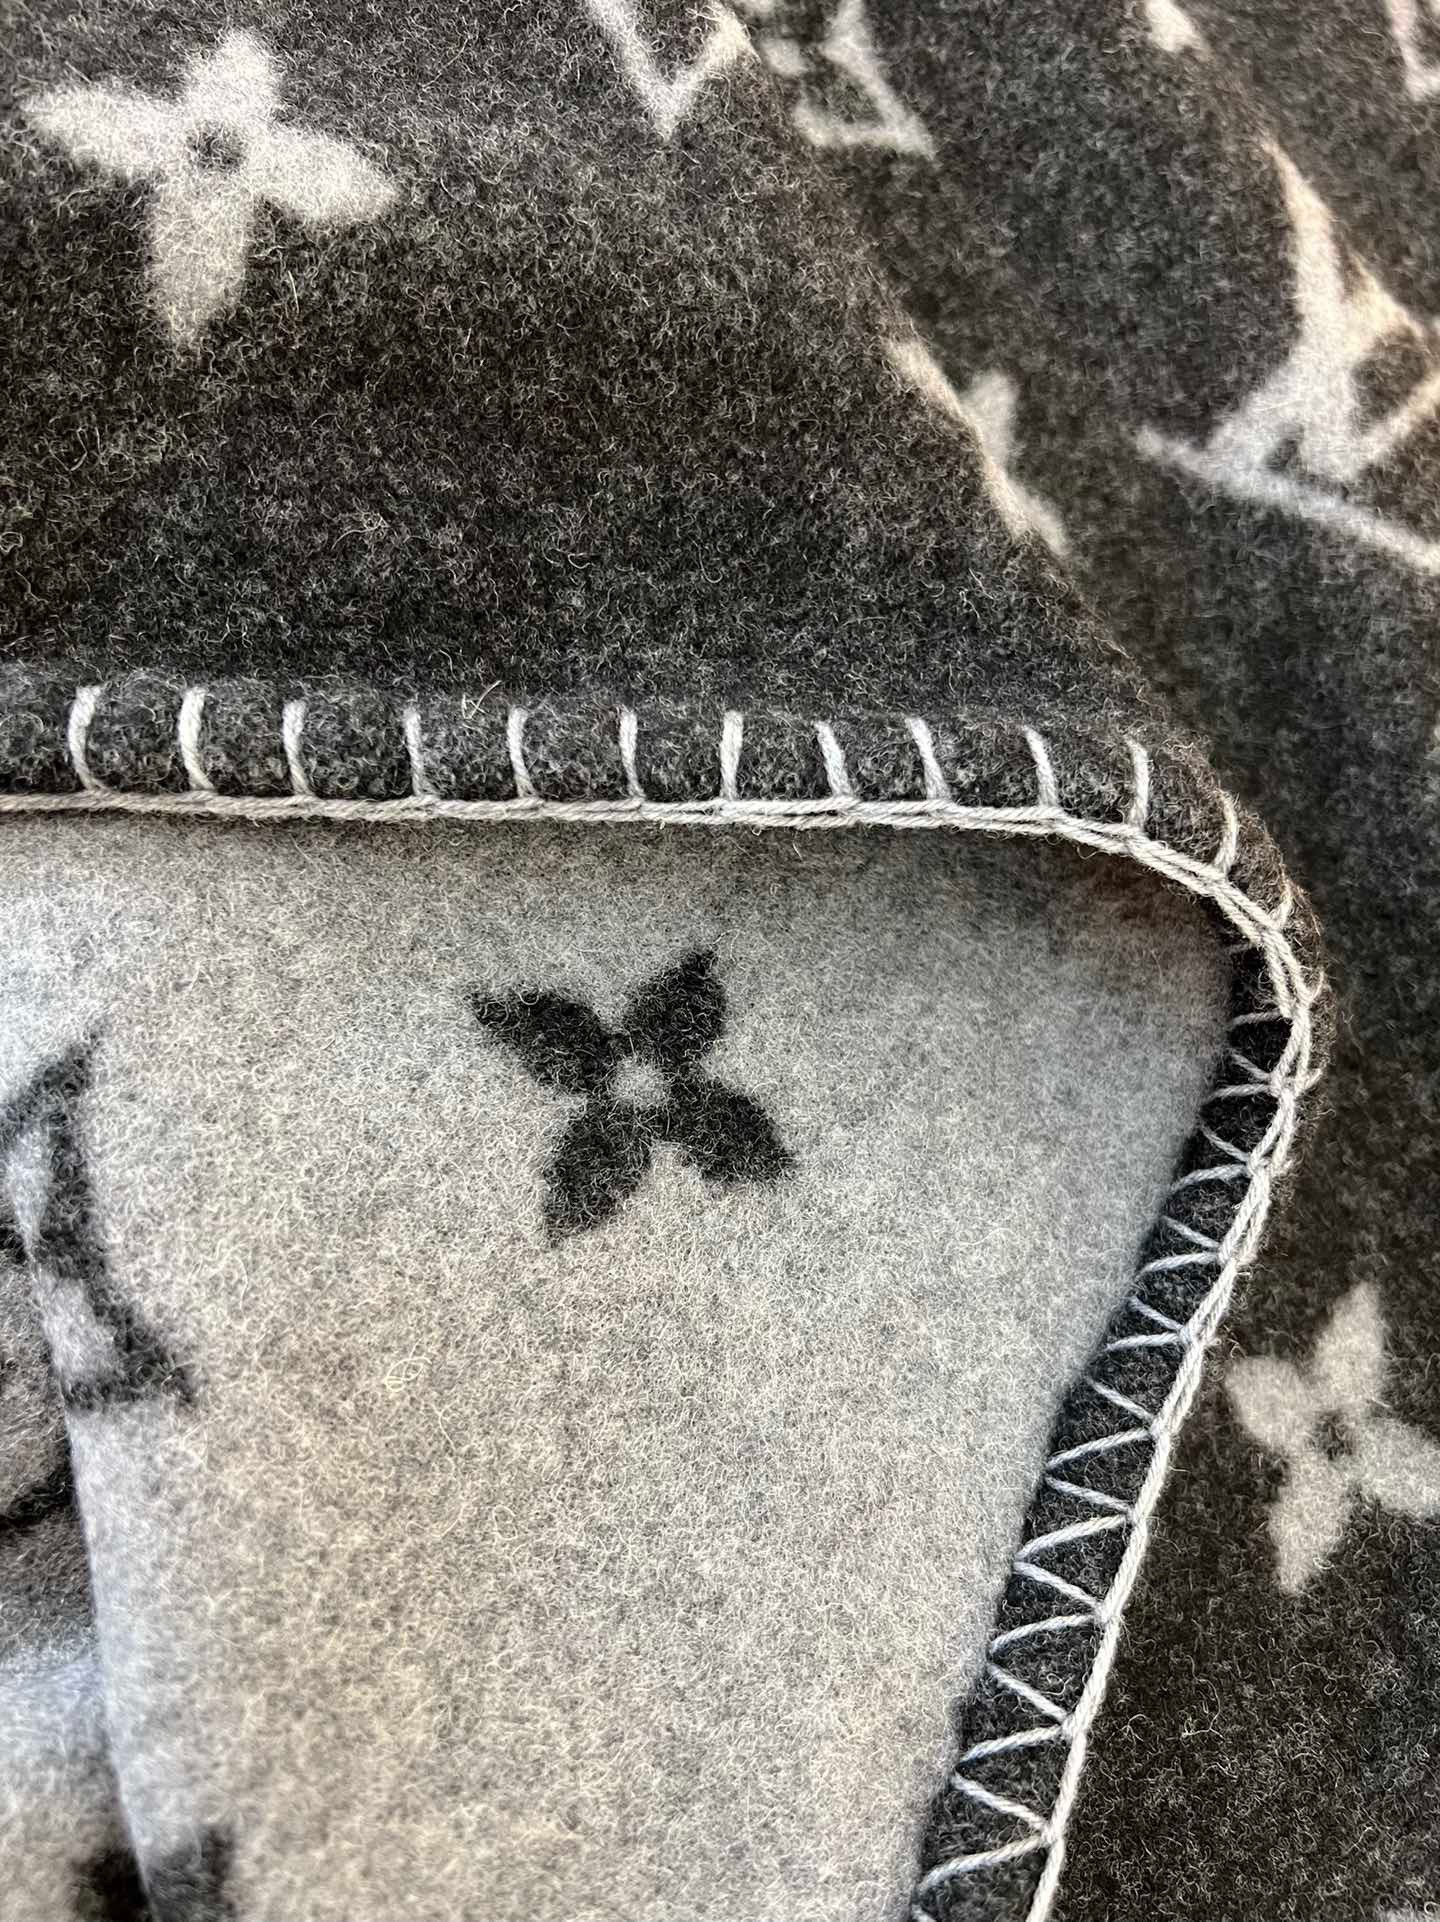 Shop Louis Vuitton Neo Monogram Blanket (PLAID MONOGRAM ECLIPSE, PLAID NEO  MONOGRAM, black brown, NEO MONOGRAM BLANKET, M70439, M76032) by Mikrie